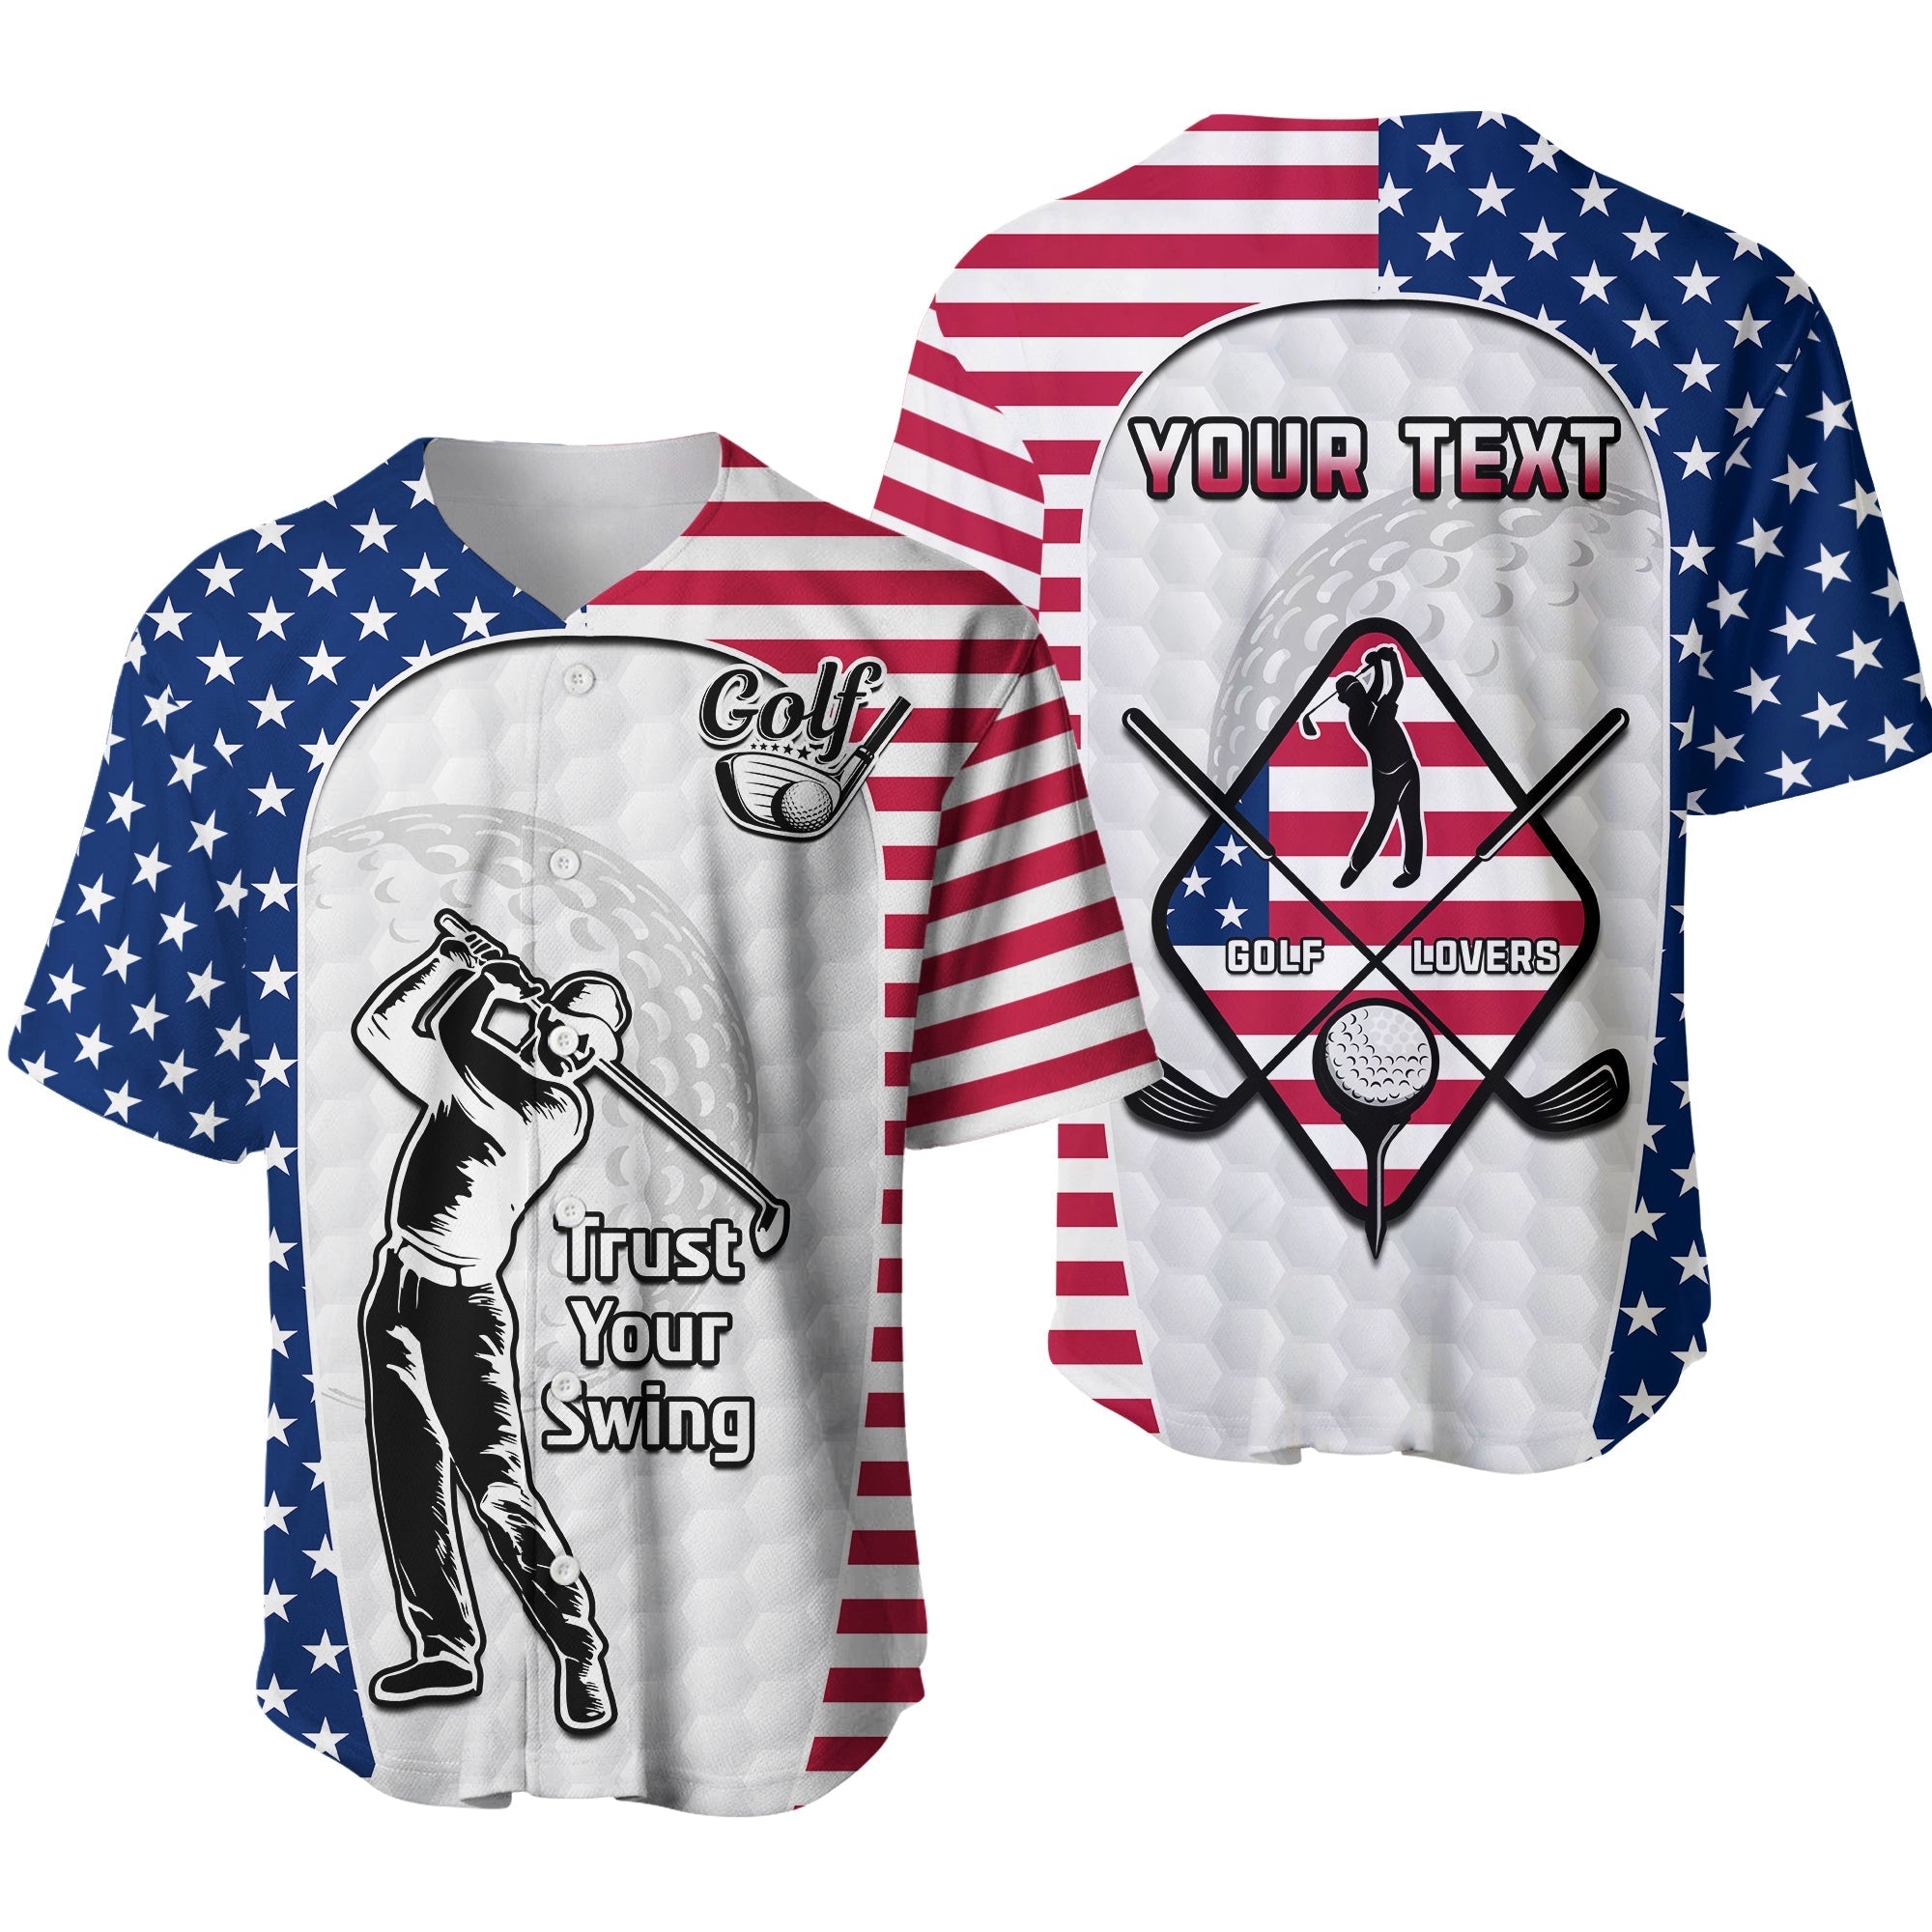 custom-personalised-american-flag-golf-baseball-jersey-gofl-lovers-trust-your-swing-ver01